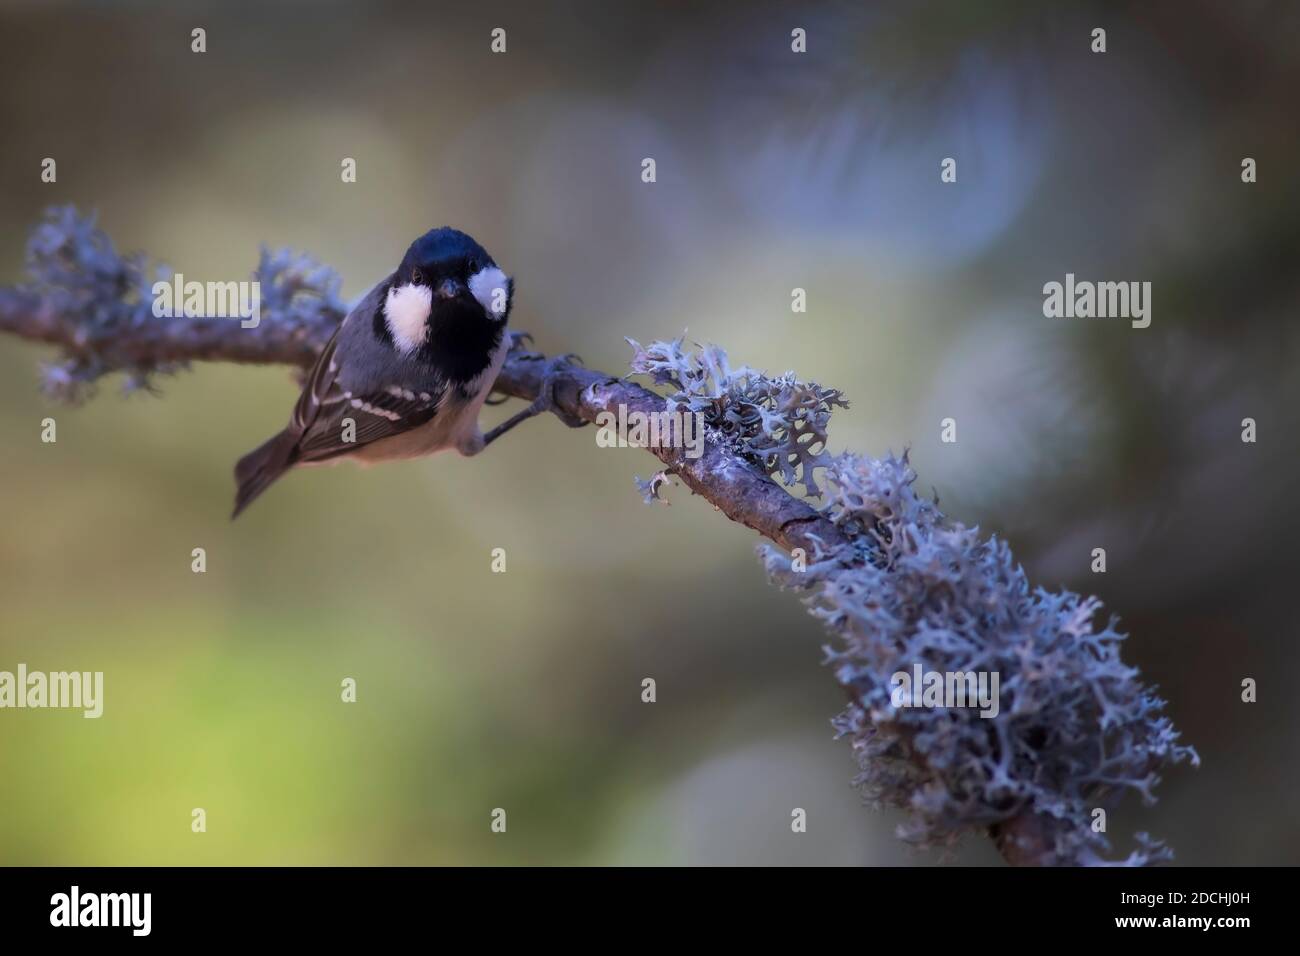 Cute little bird. Green nature background. Coal Tit / Periparus ater. Stock Photo